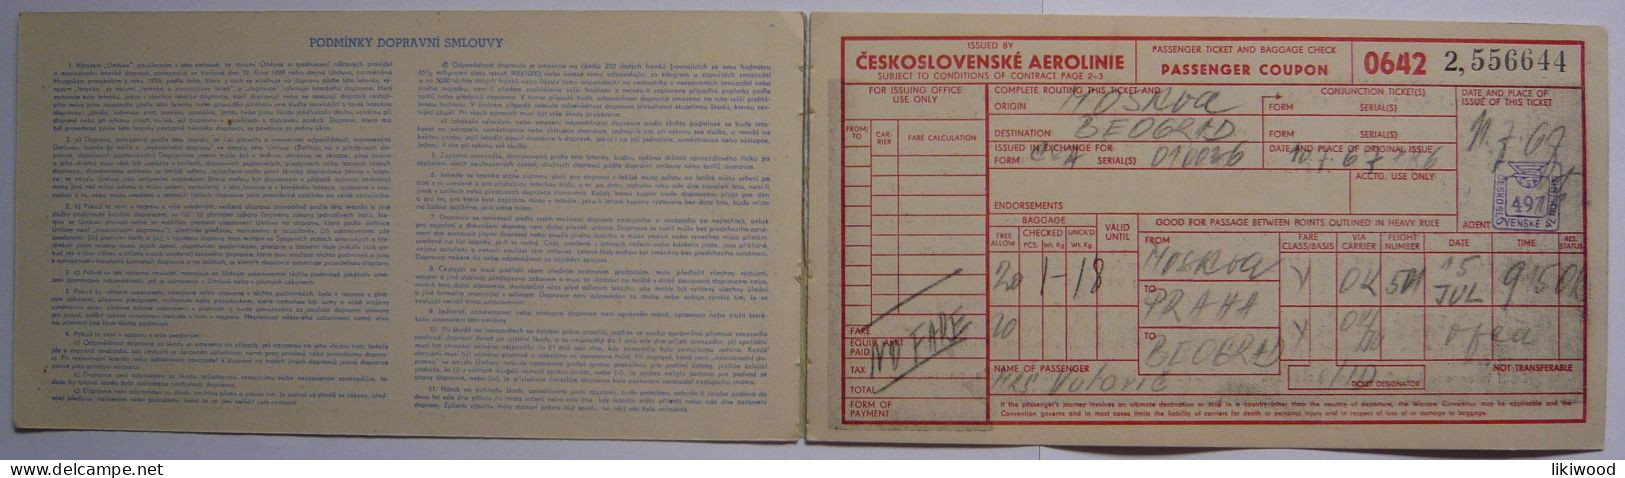 ČSA - Československe Aerolinie - Passenger Ticket And Baggage Check - Europe